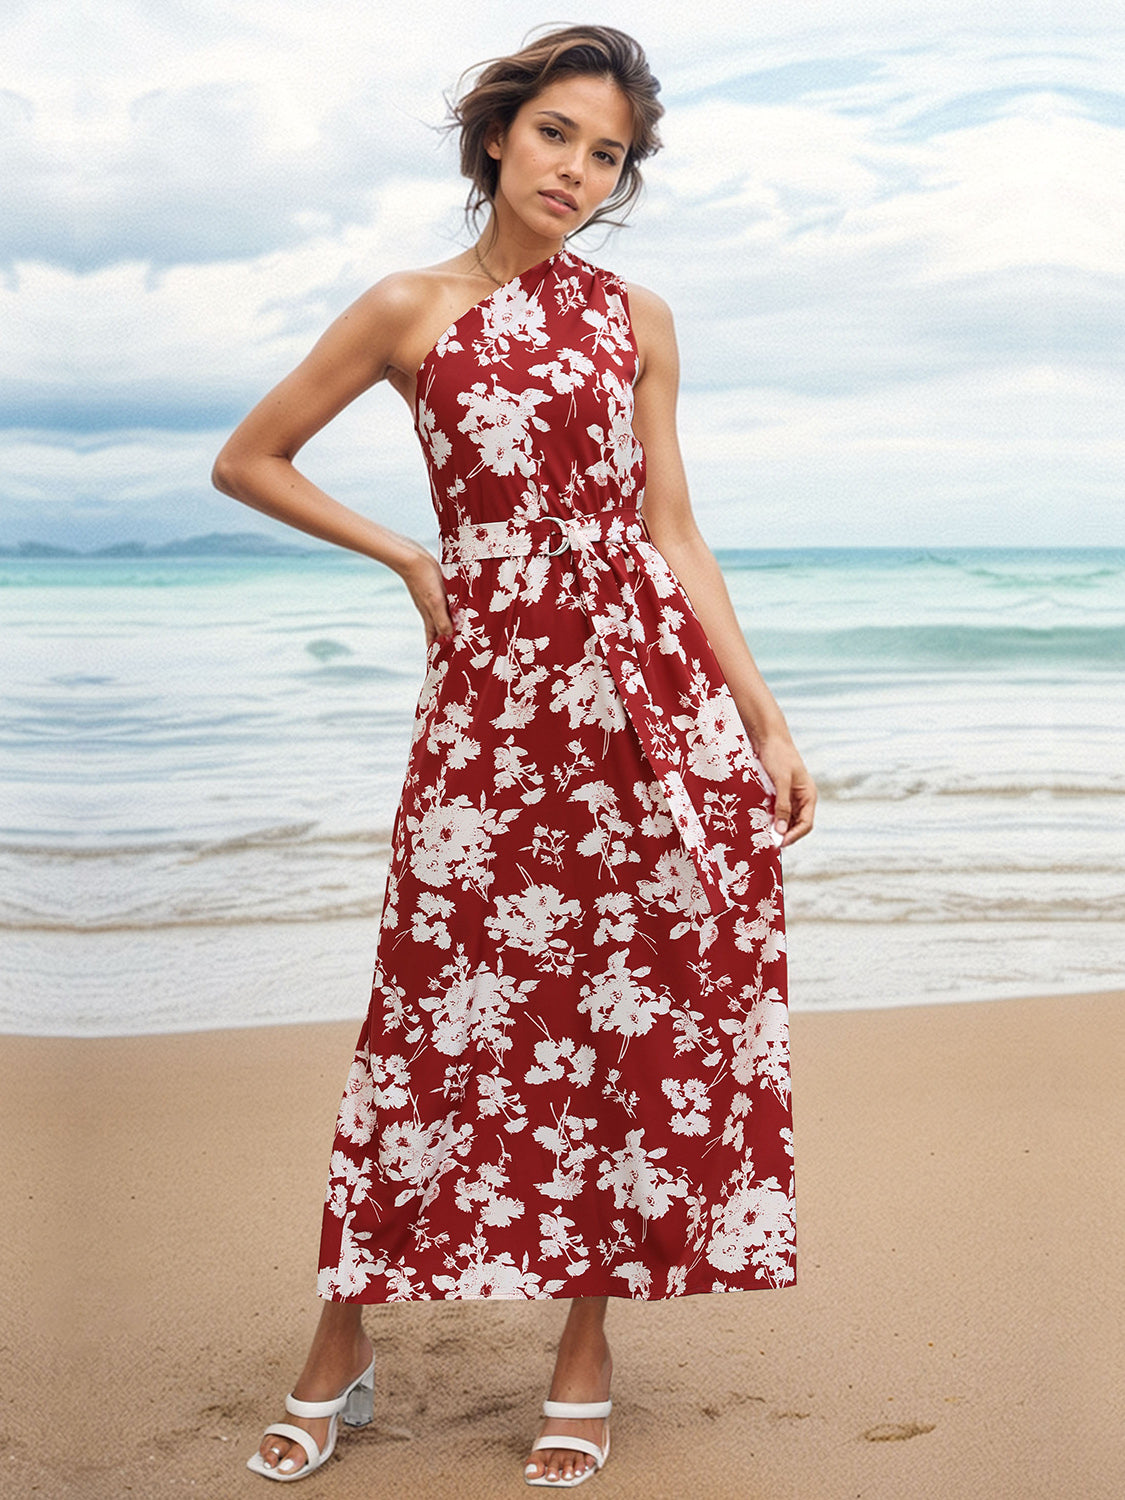 Beach Wedding Guest Dress for Women - Elegant Single Shoulder Sleeveless Attire